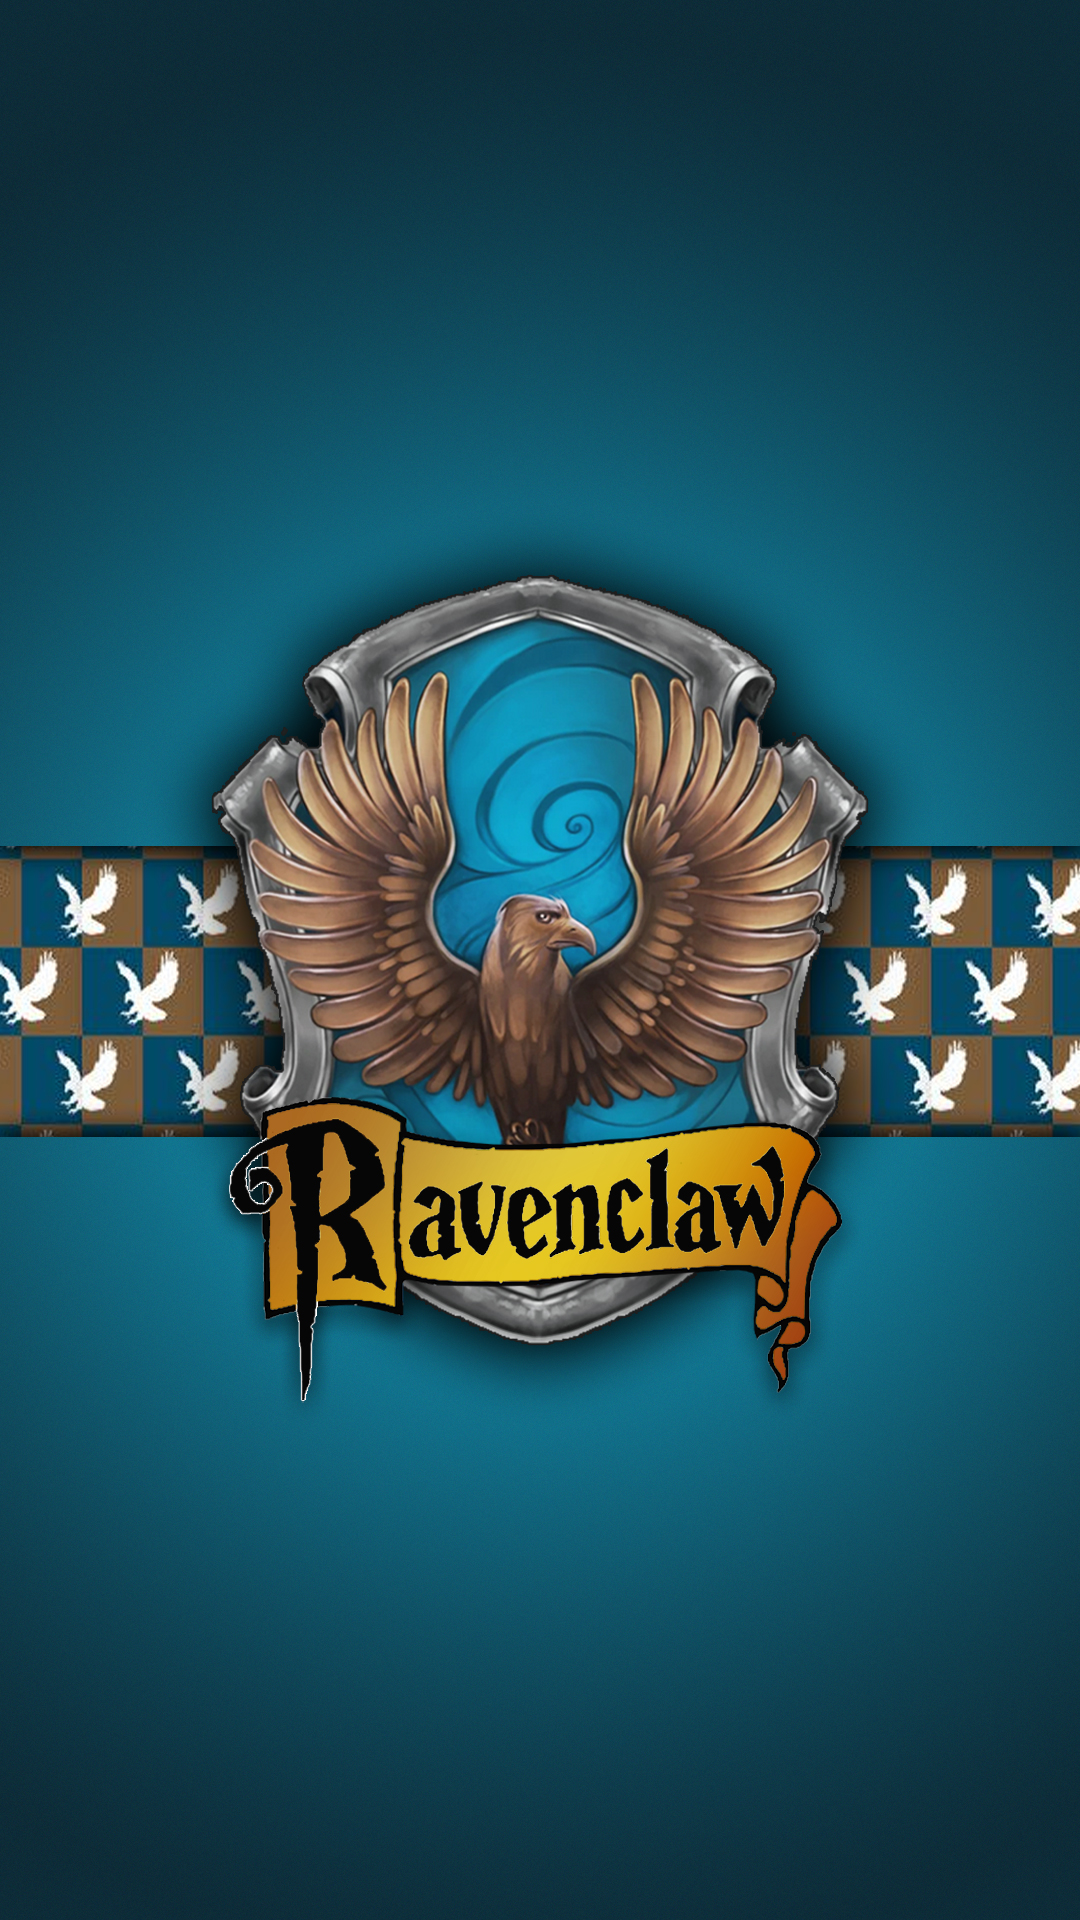 Harry Potter Ravenclaw House